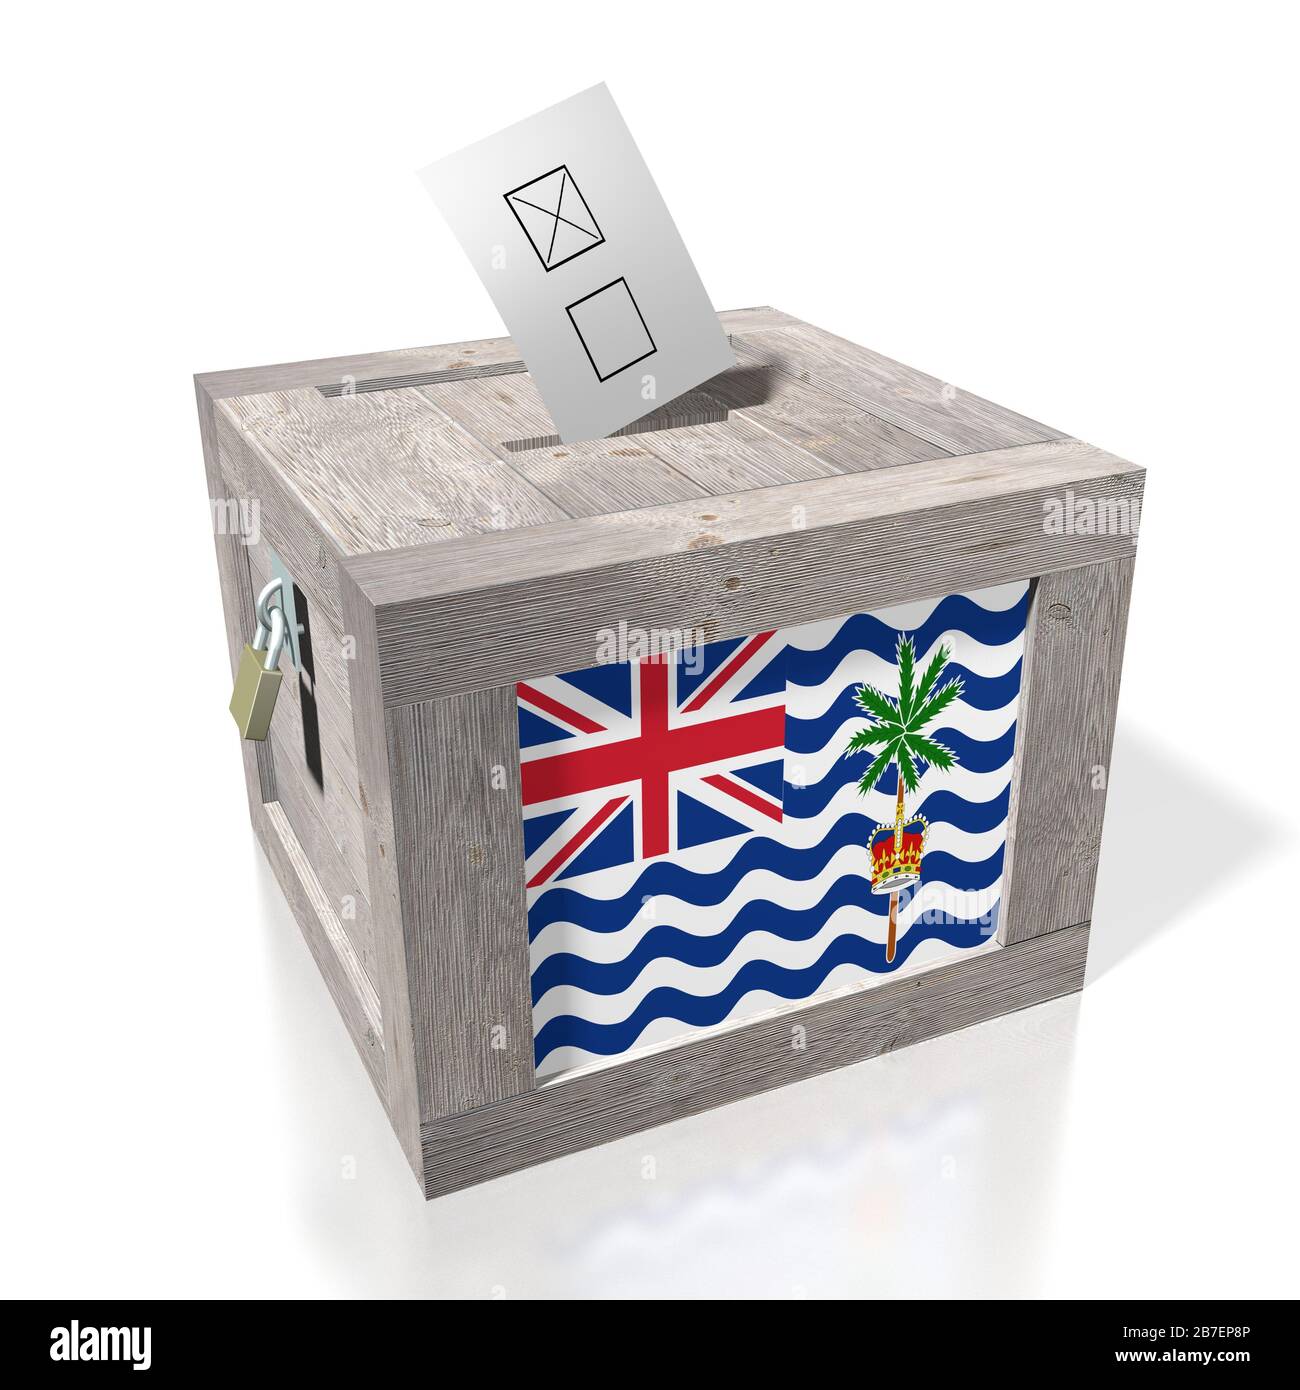 Election/voting concept Stock Photo